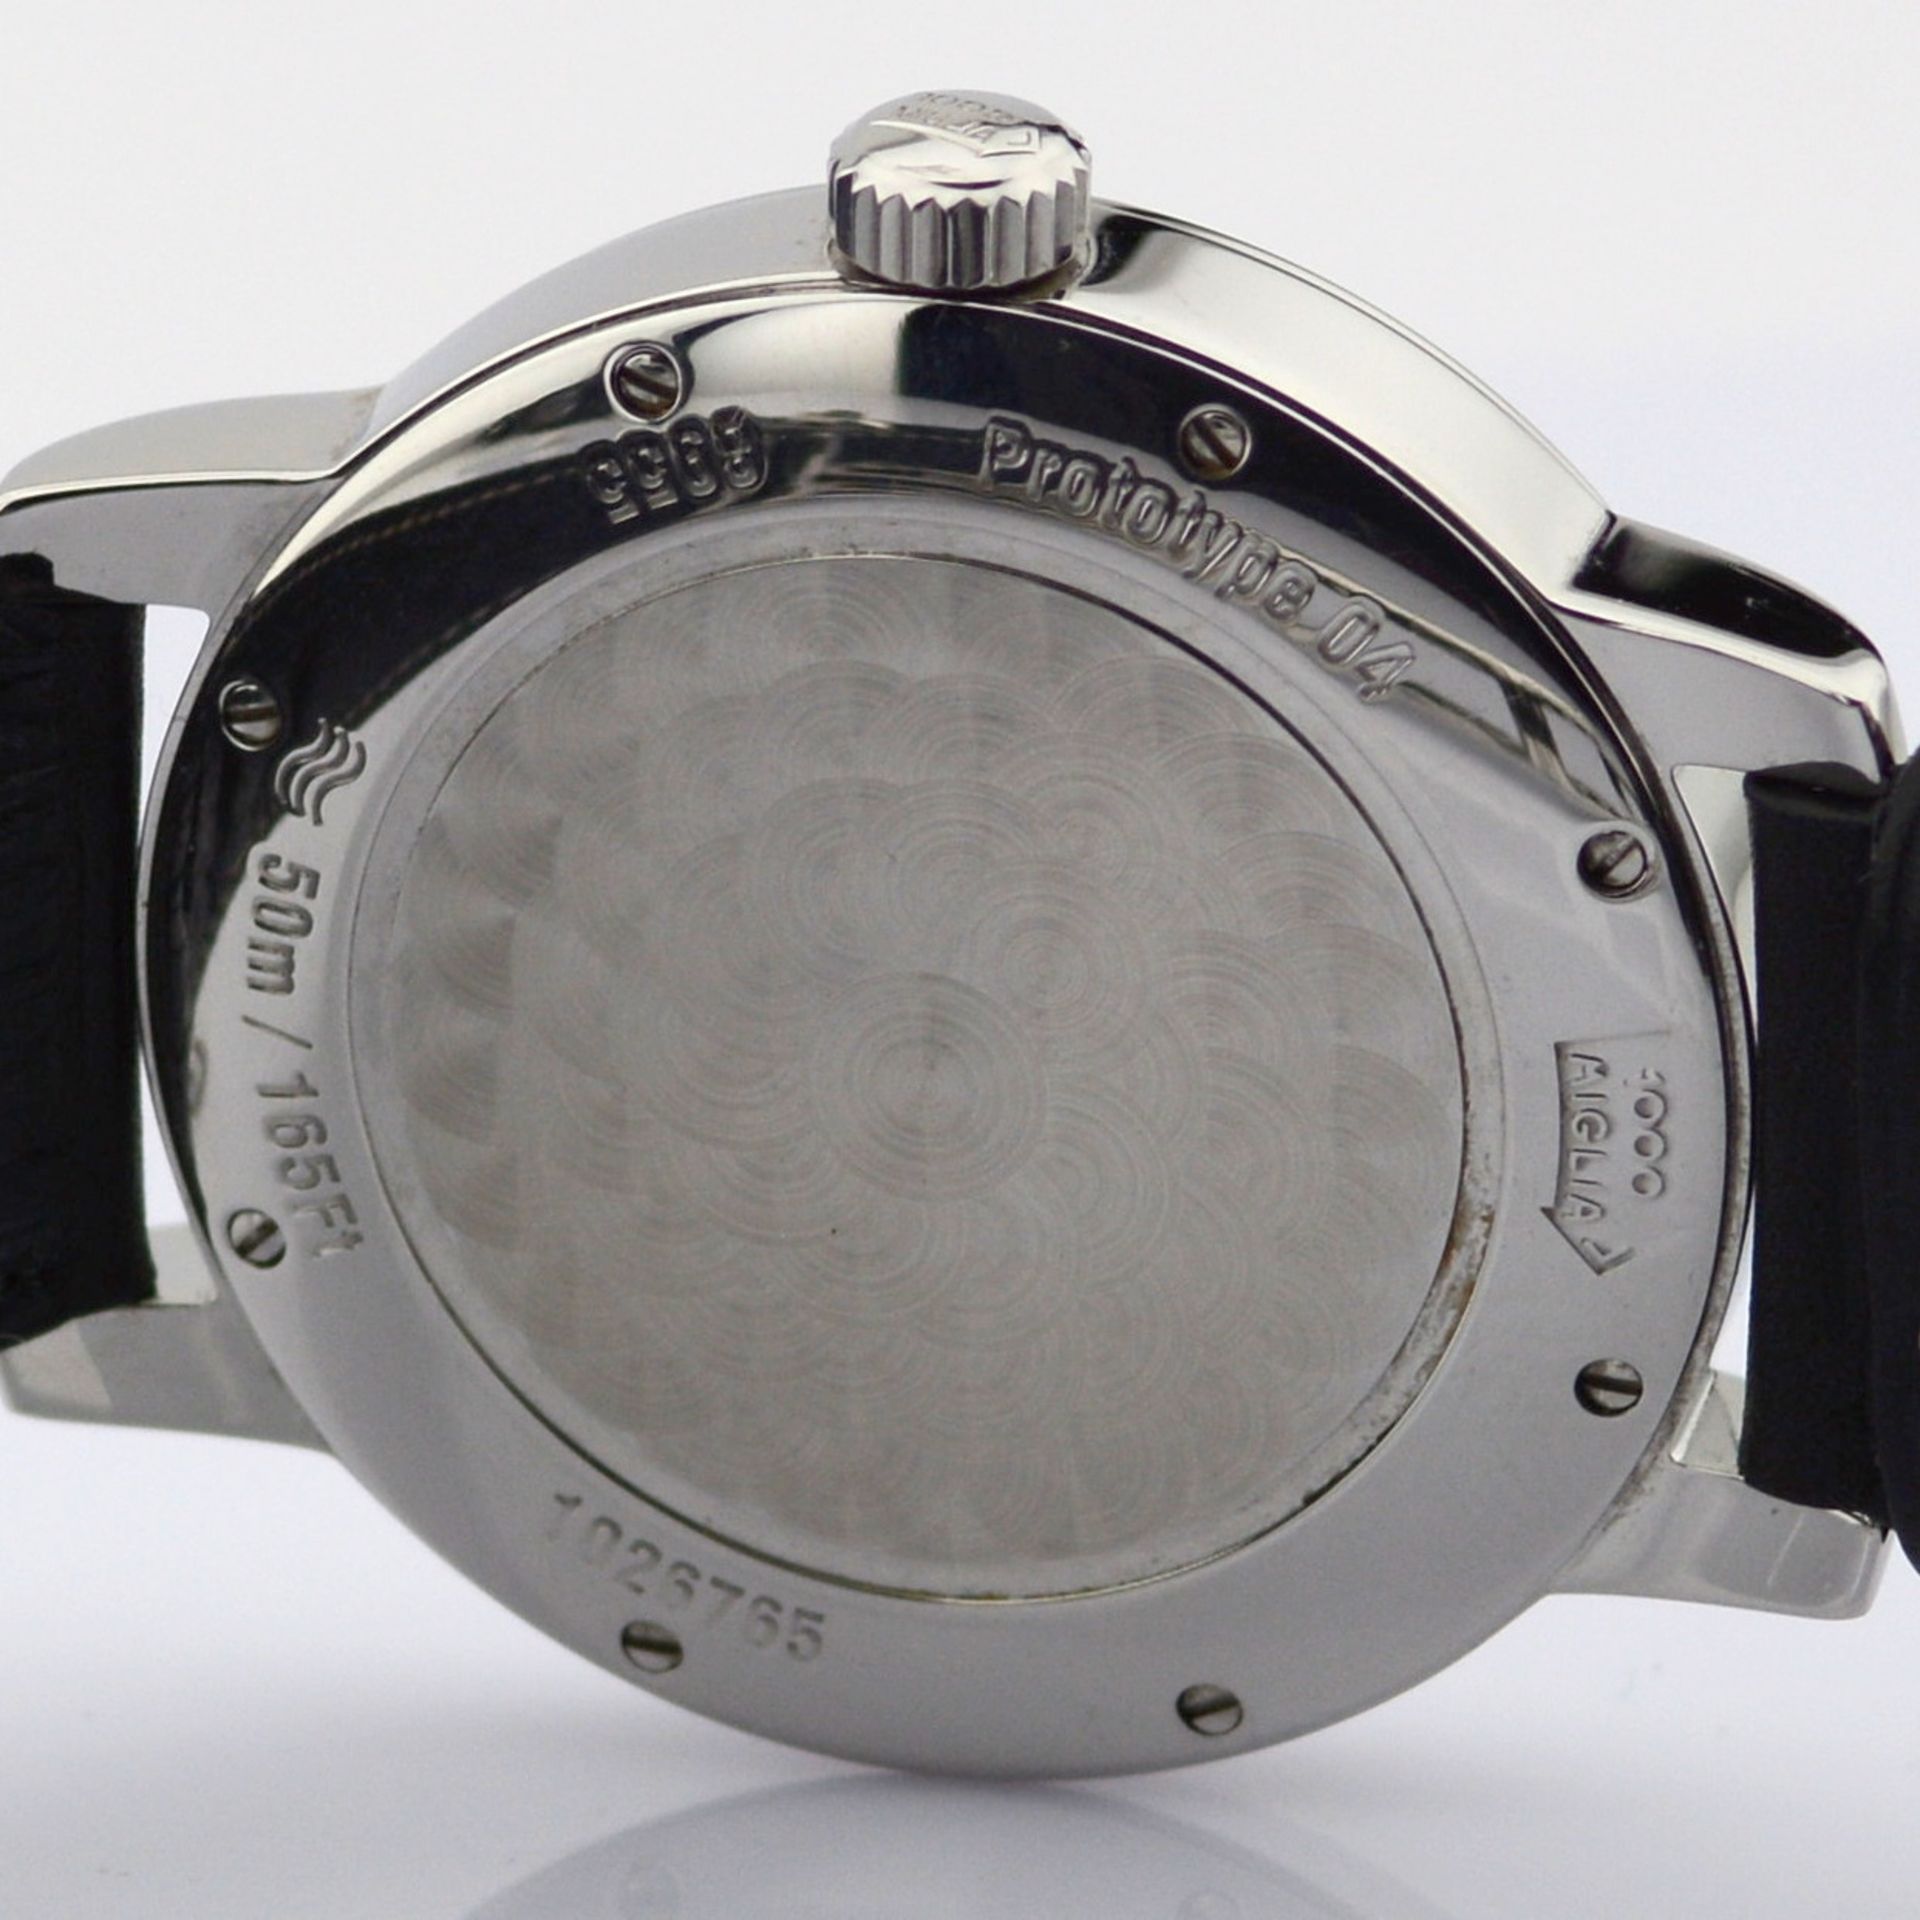 Chopard / 1000 Miglia Grand Turismo Prototype - Gentlmen's Steel Wrist Watch - Image 7 of 8